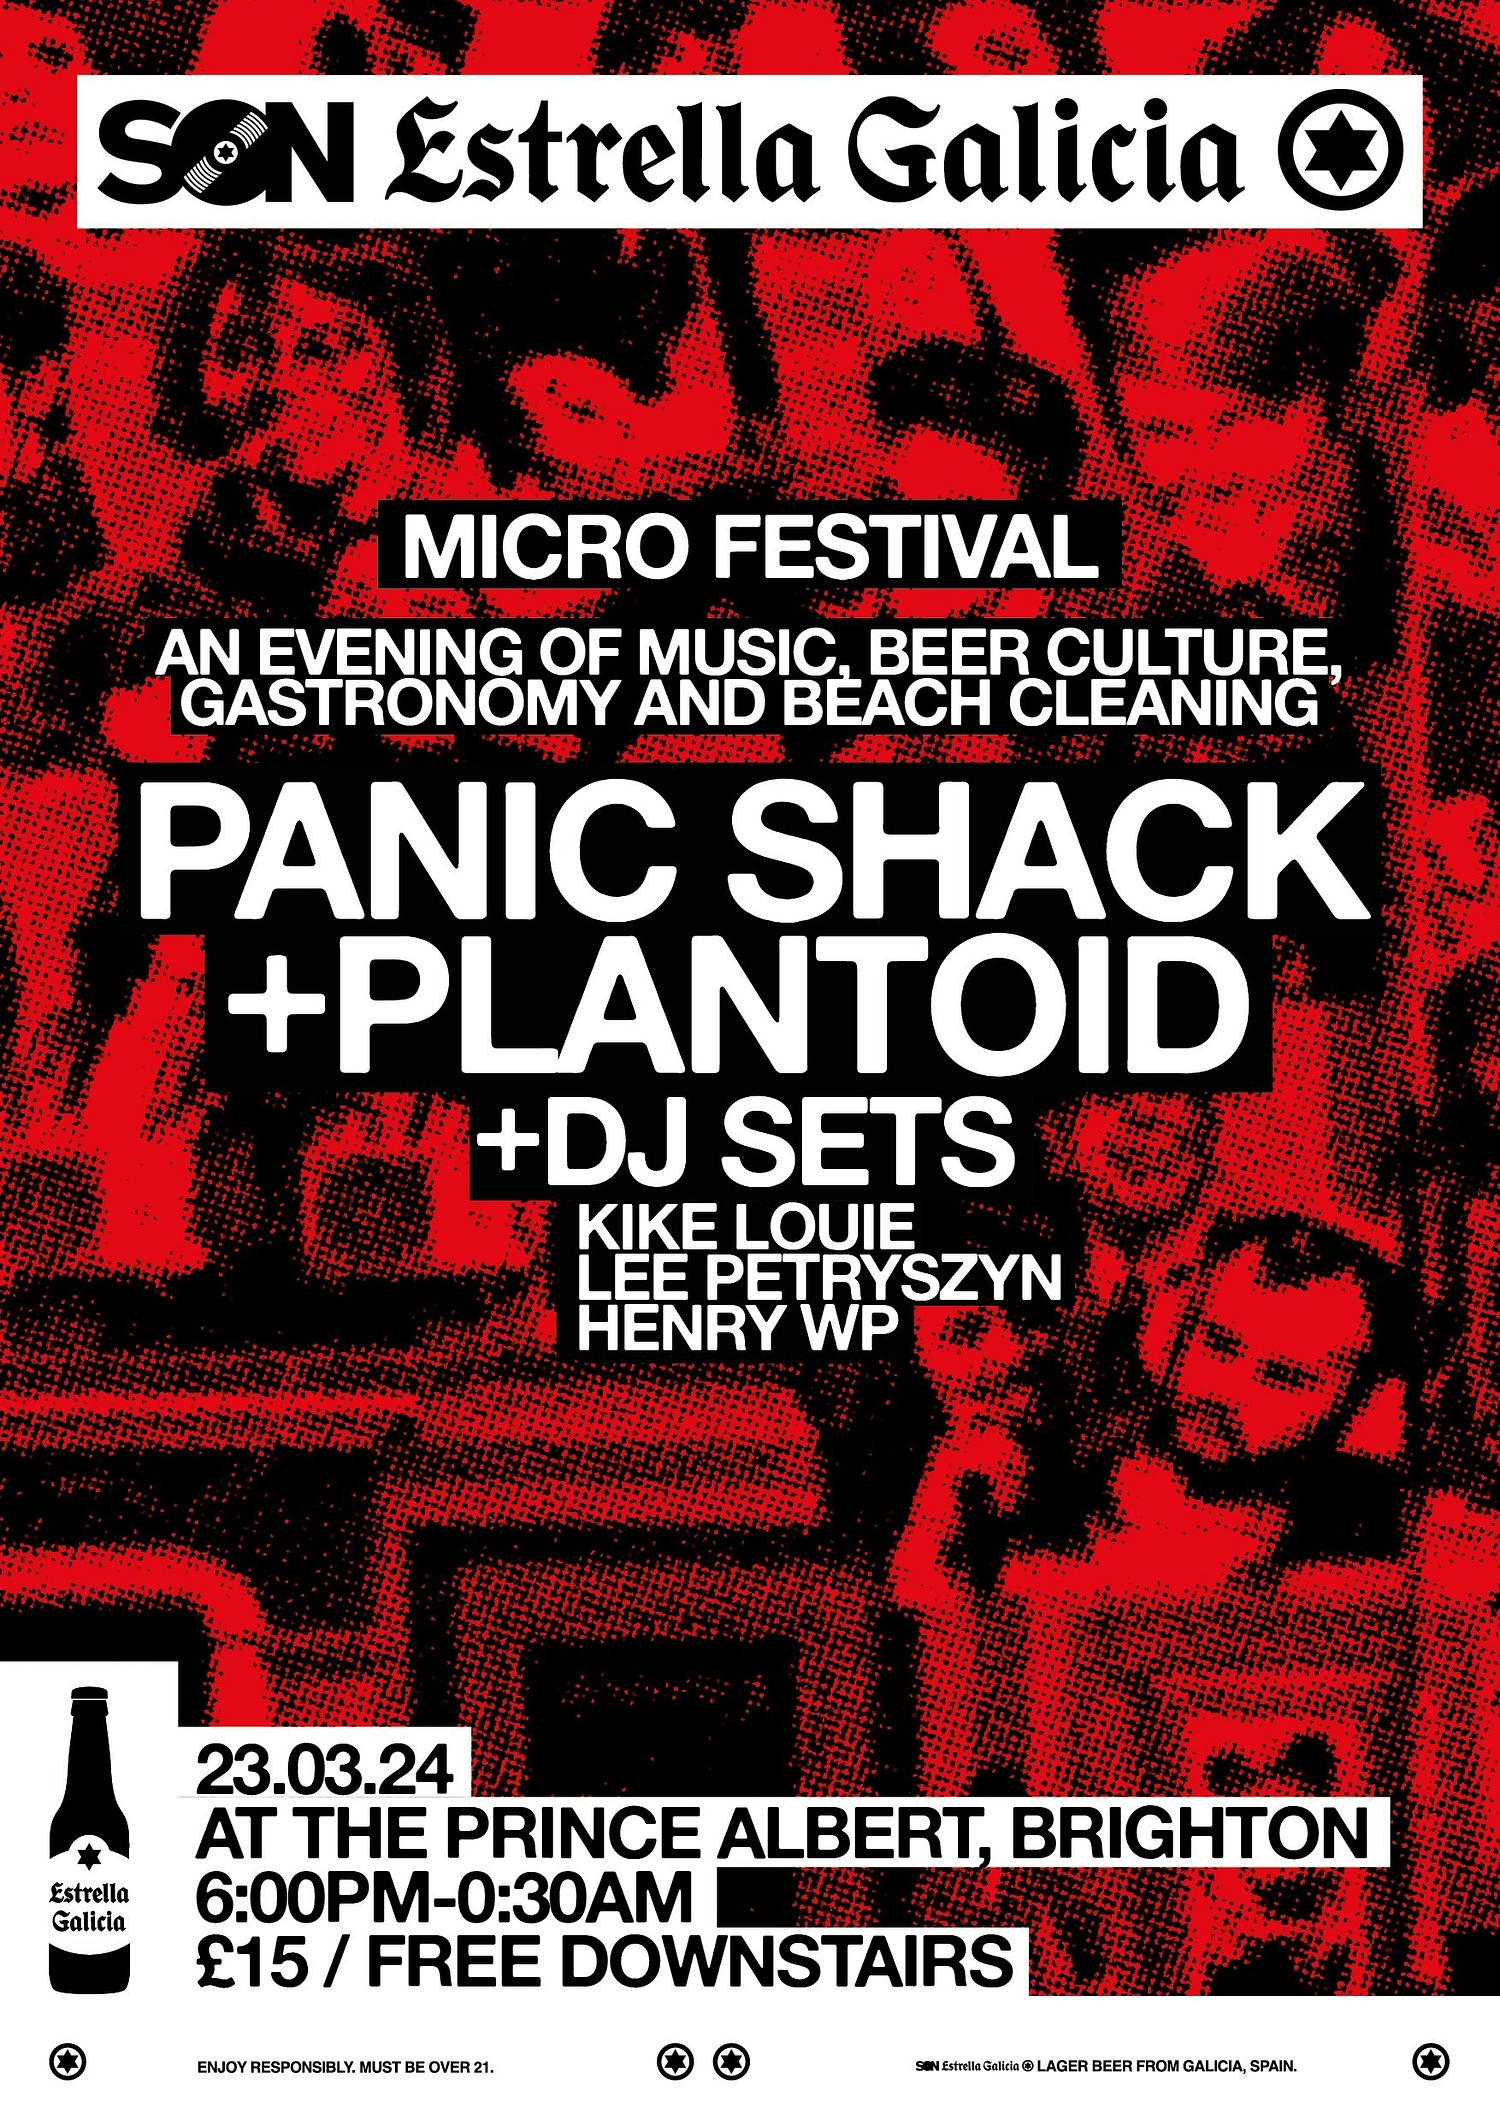 Panic Shack and Plantoid to play Brighton micro-festival for Son Estrella Galicia